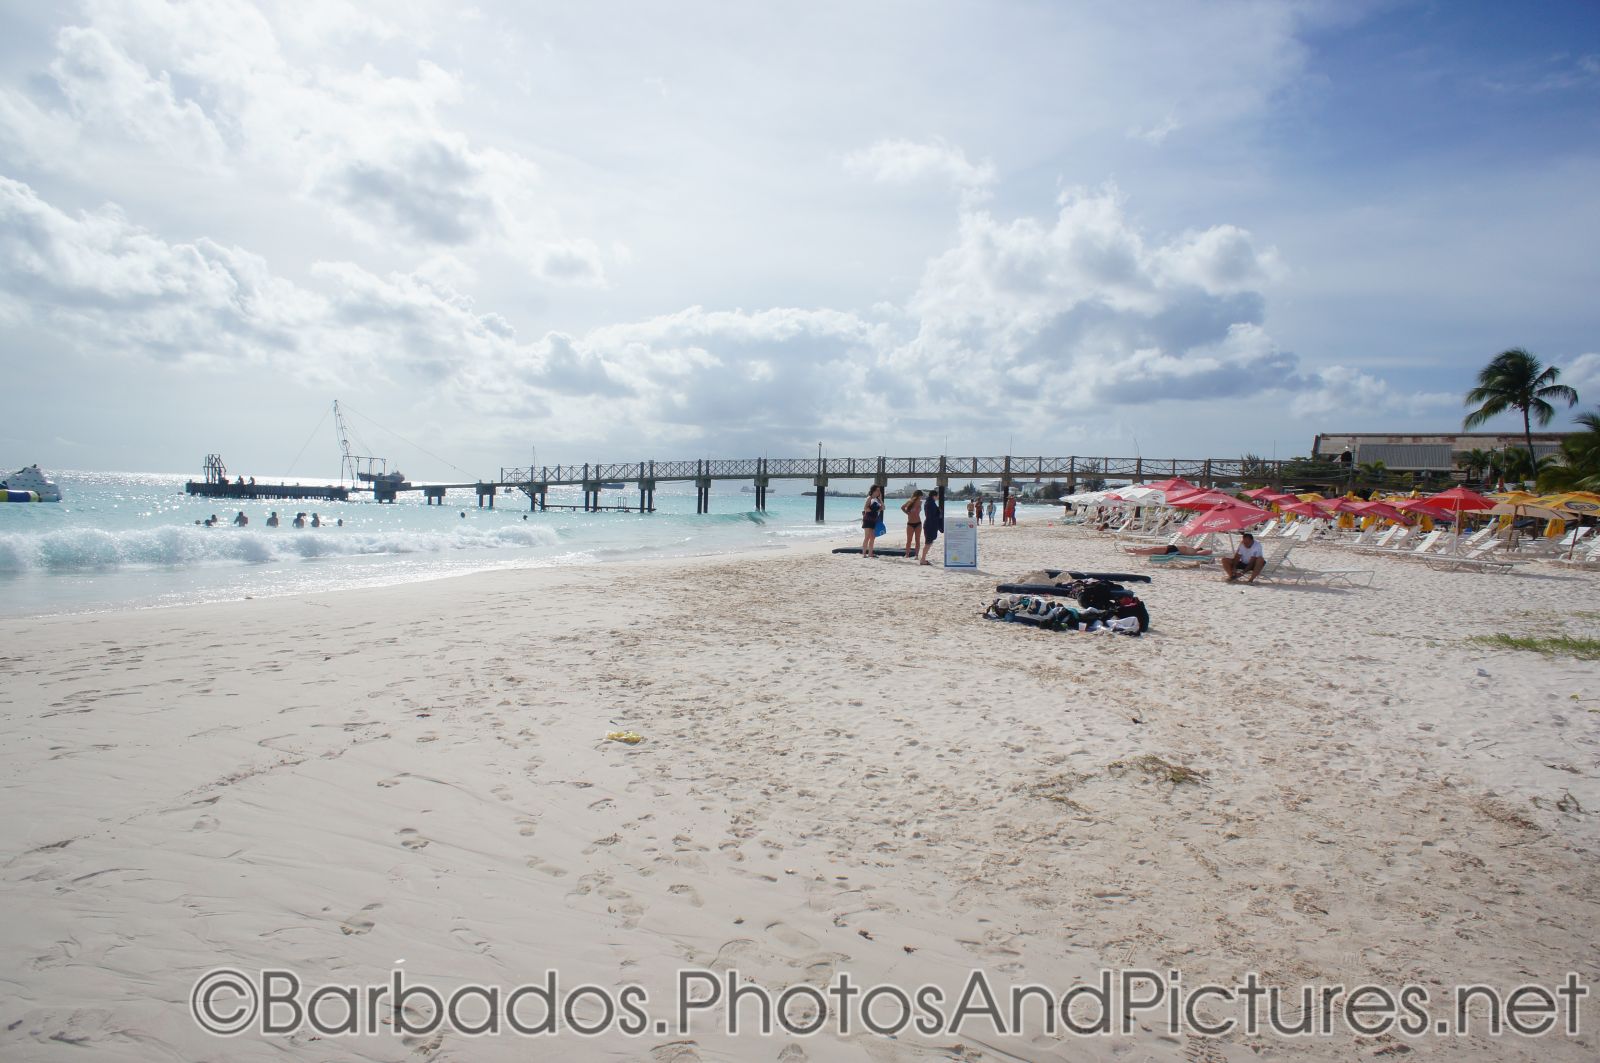 Pier at Carlisle Bay Beach in Bridgetown Barbados.jpg
